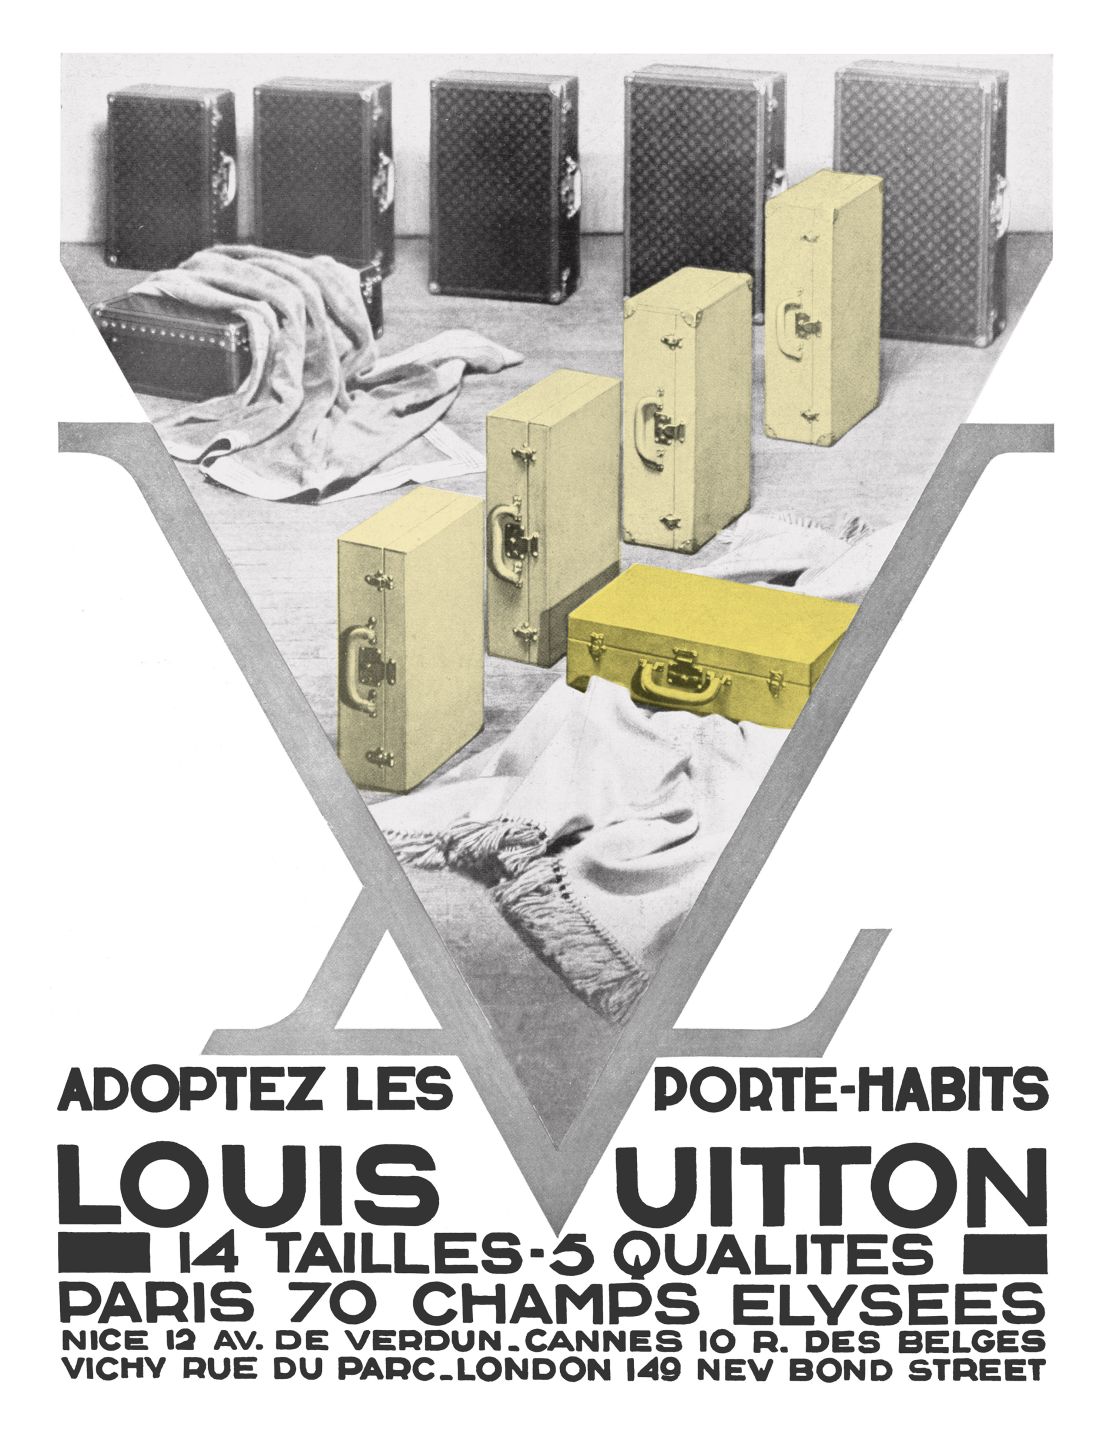 Louis Vuitton Logo Design History and Evolution